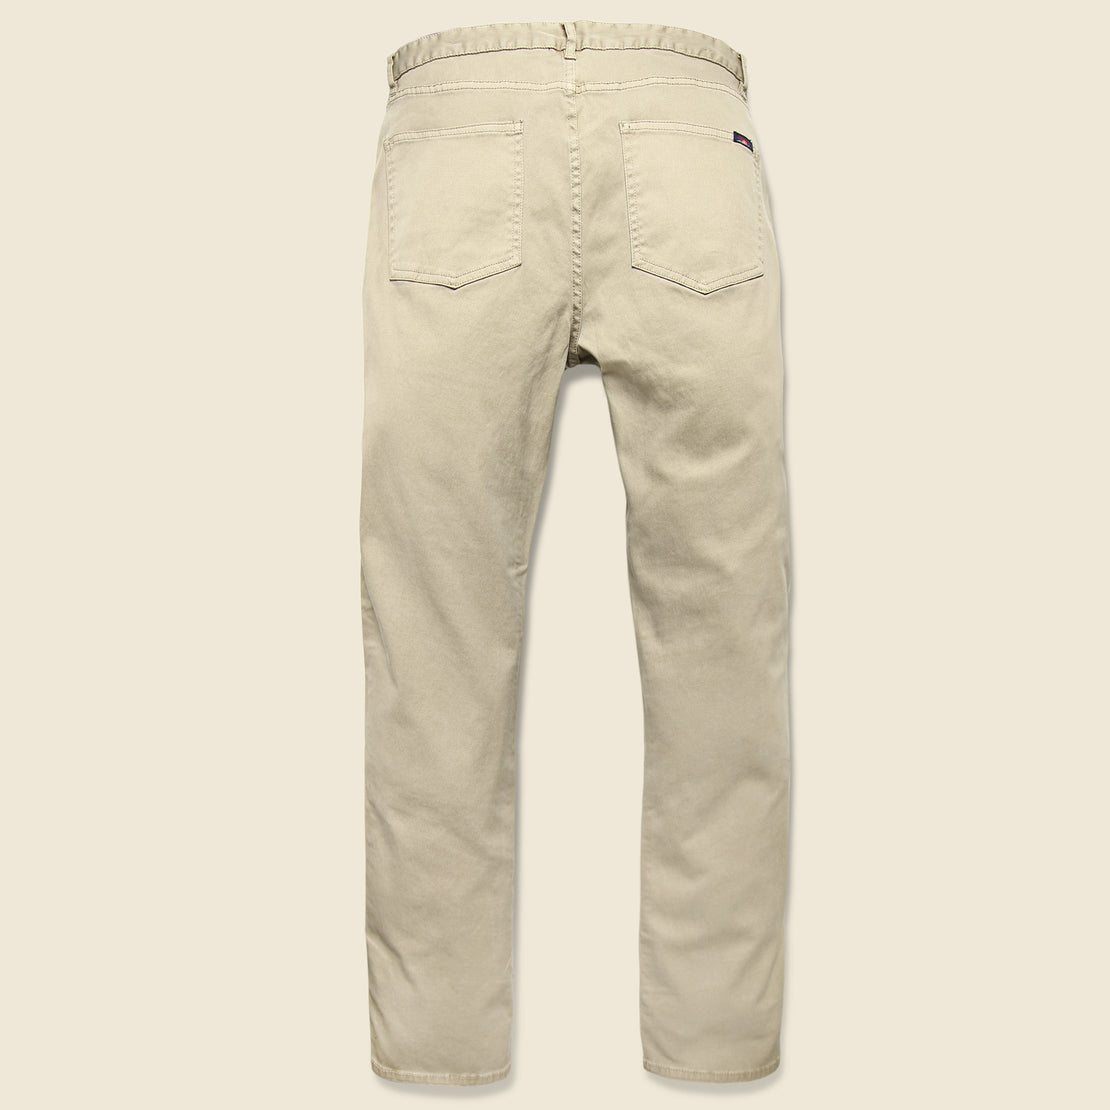 Comfort Twill Jean - Light Khaki - Faherty - STAG Provisions - Pants - Twill